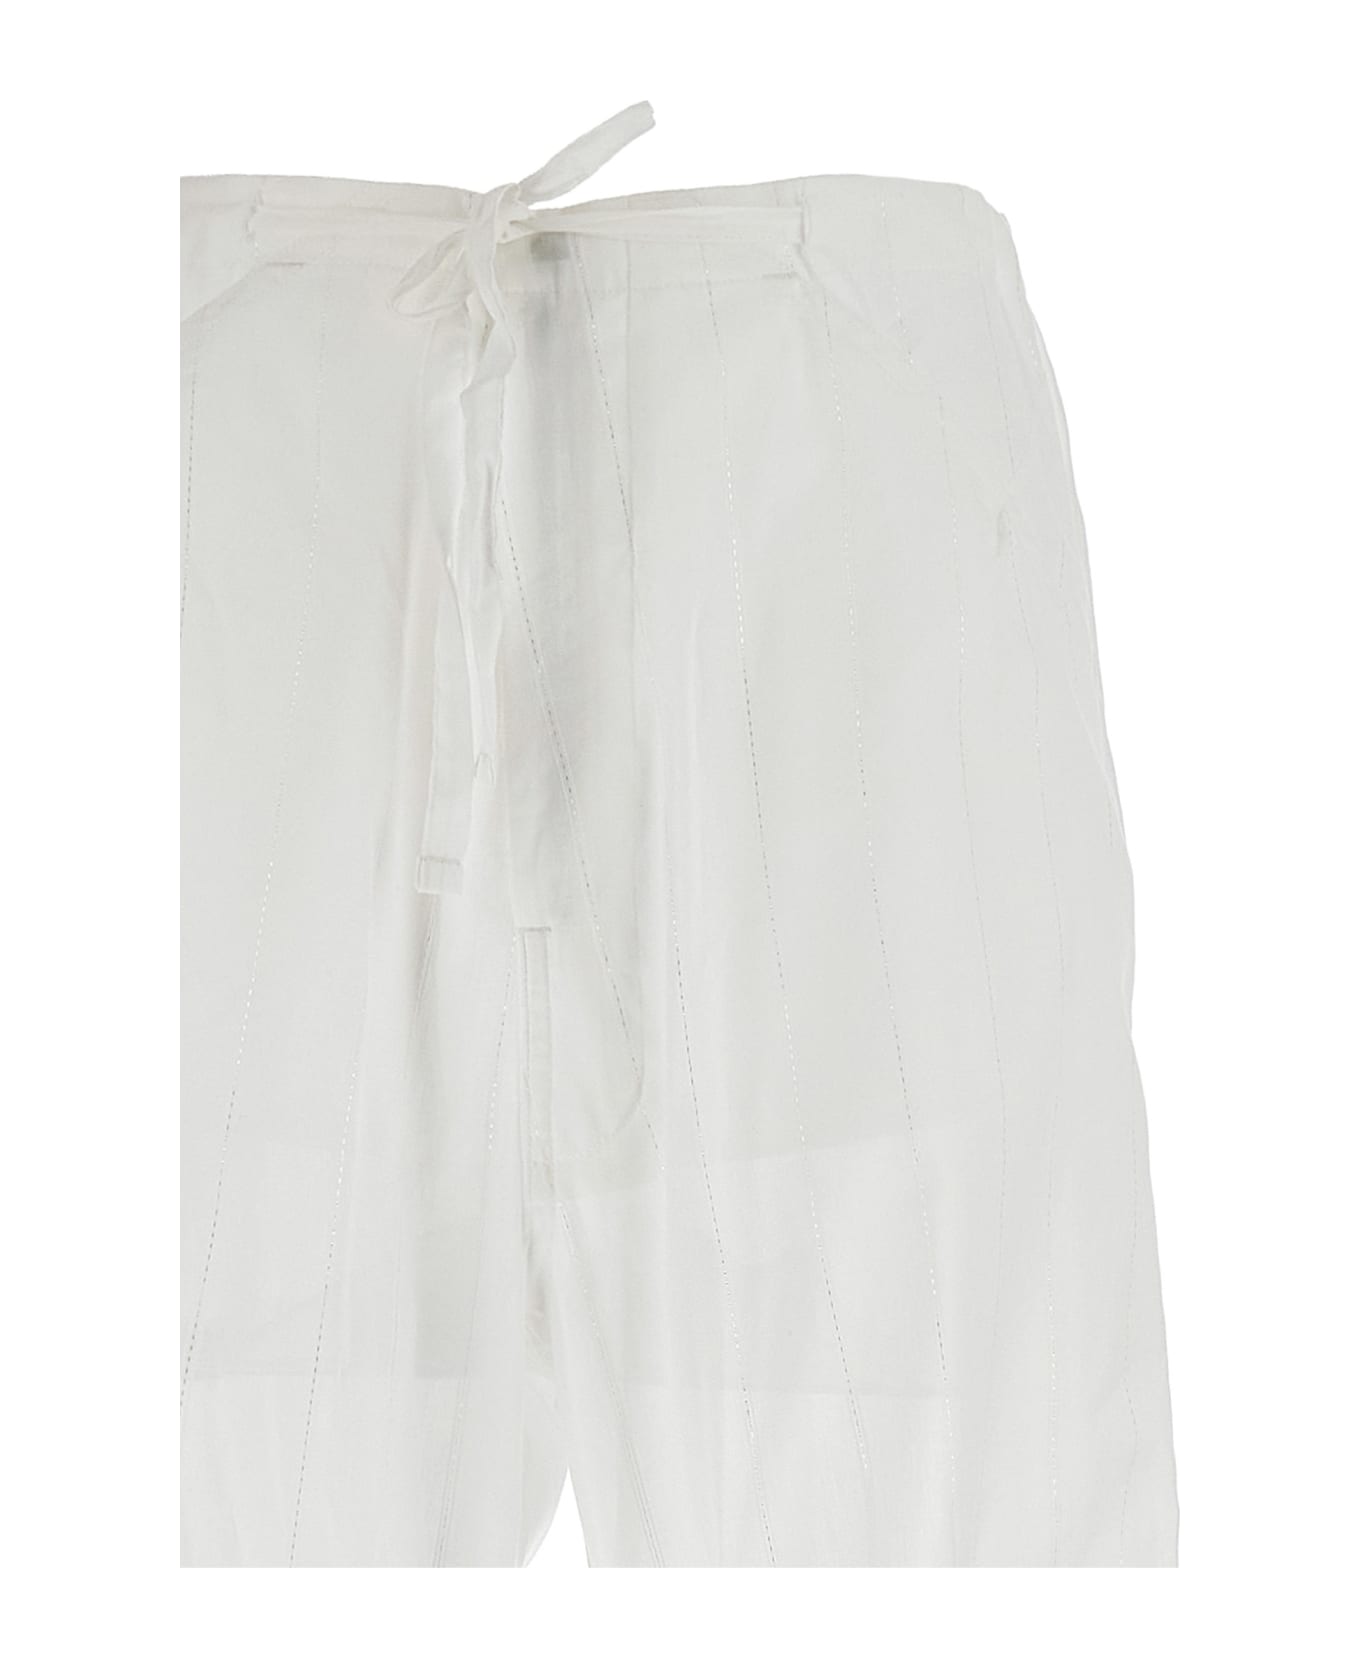 DARKPARK 'daisy' Trousers - White